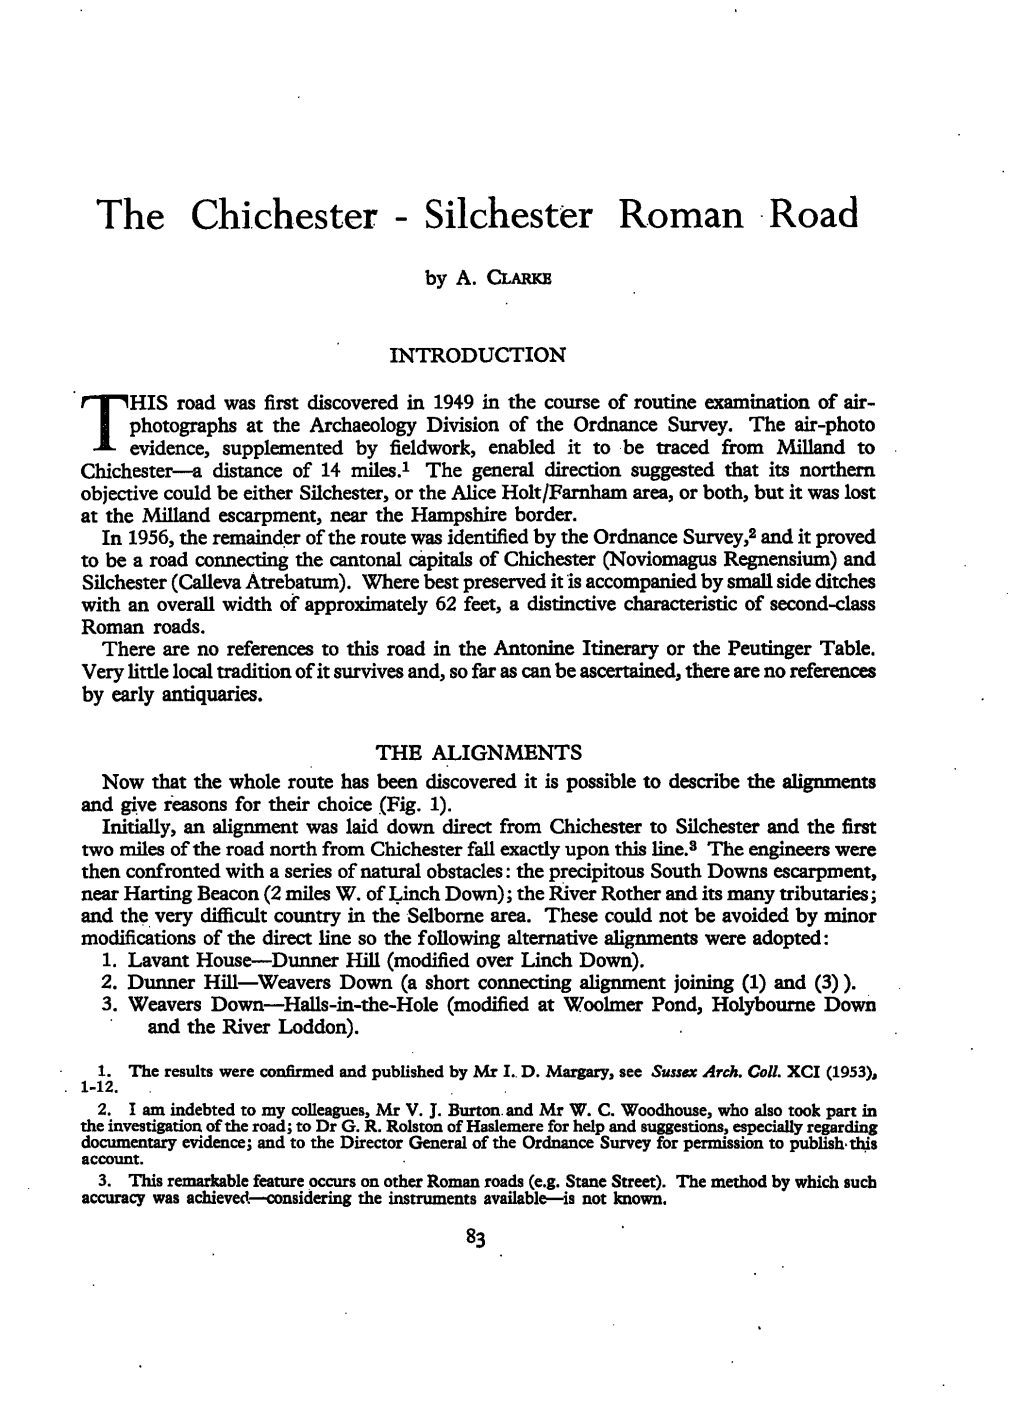 The Chichester - Silchester Roman Road